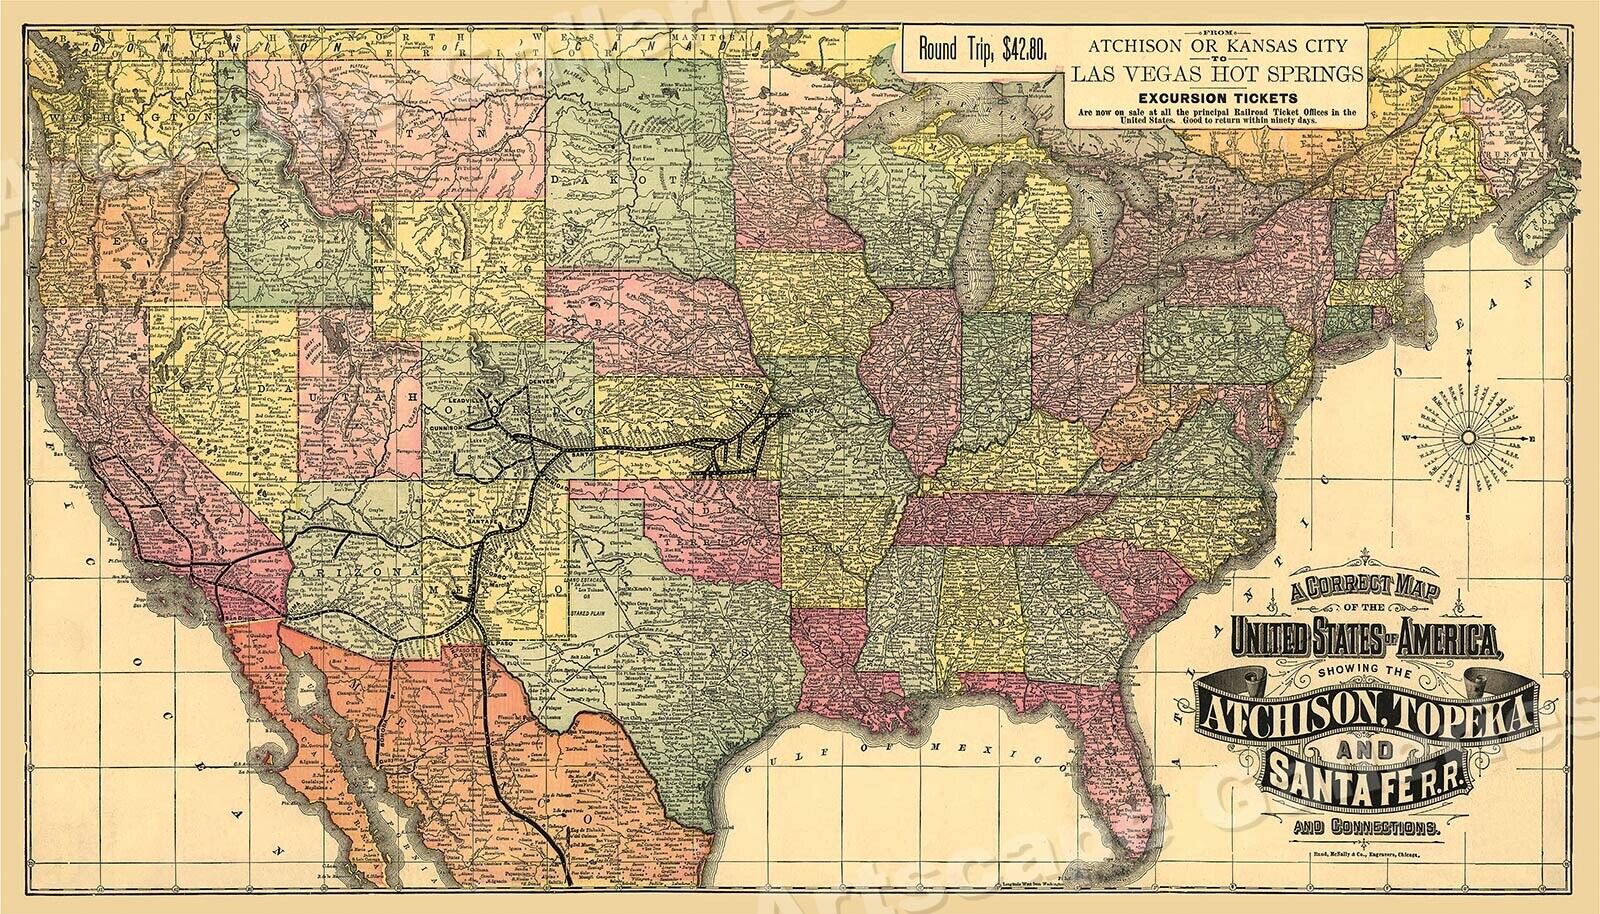 1888 Atchison, Topeka, Santa Fe RailRoad Map 24x42